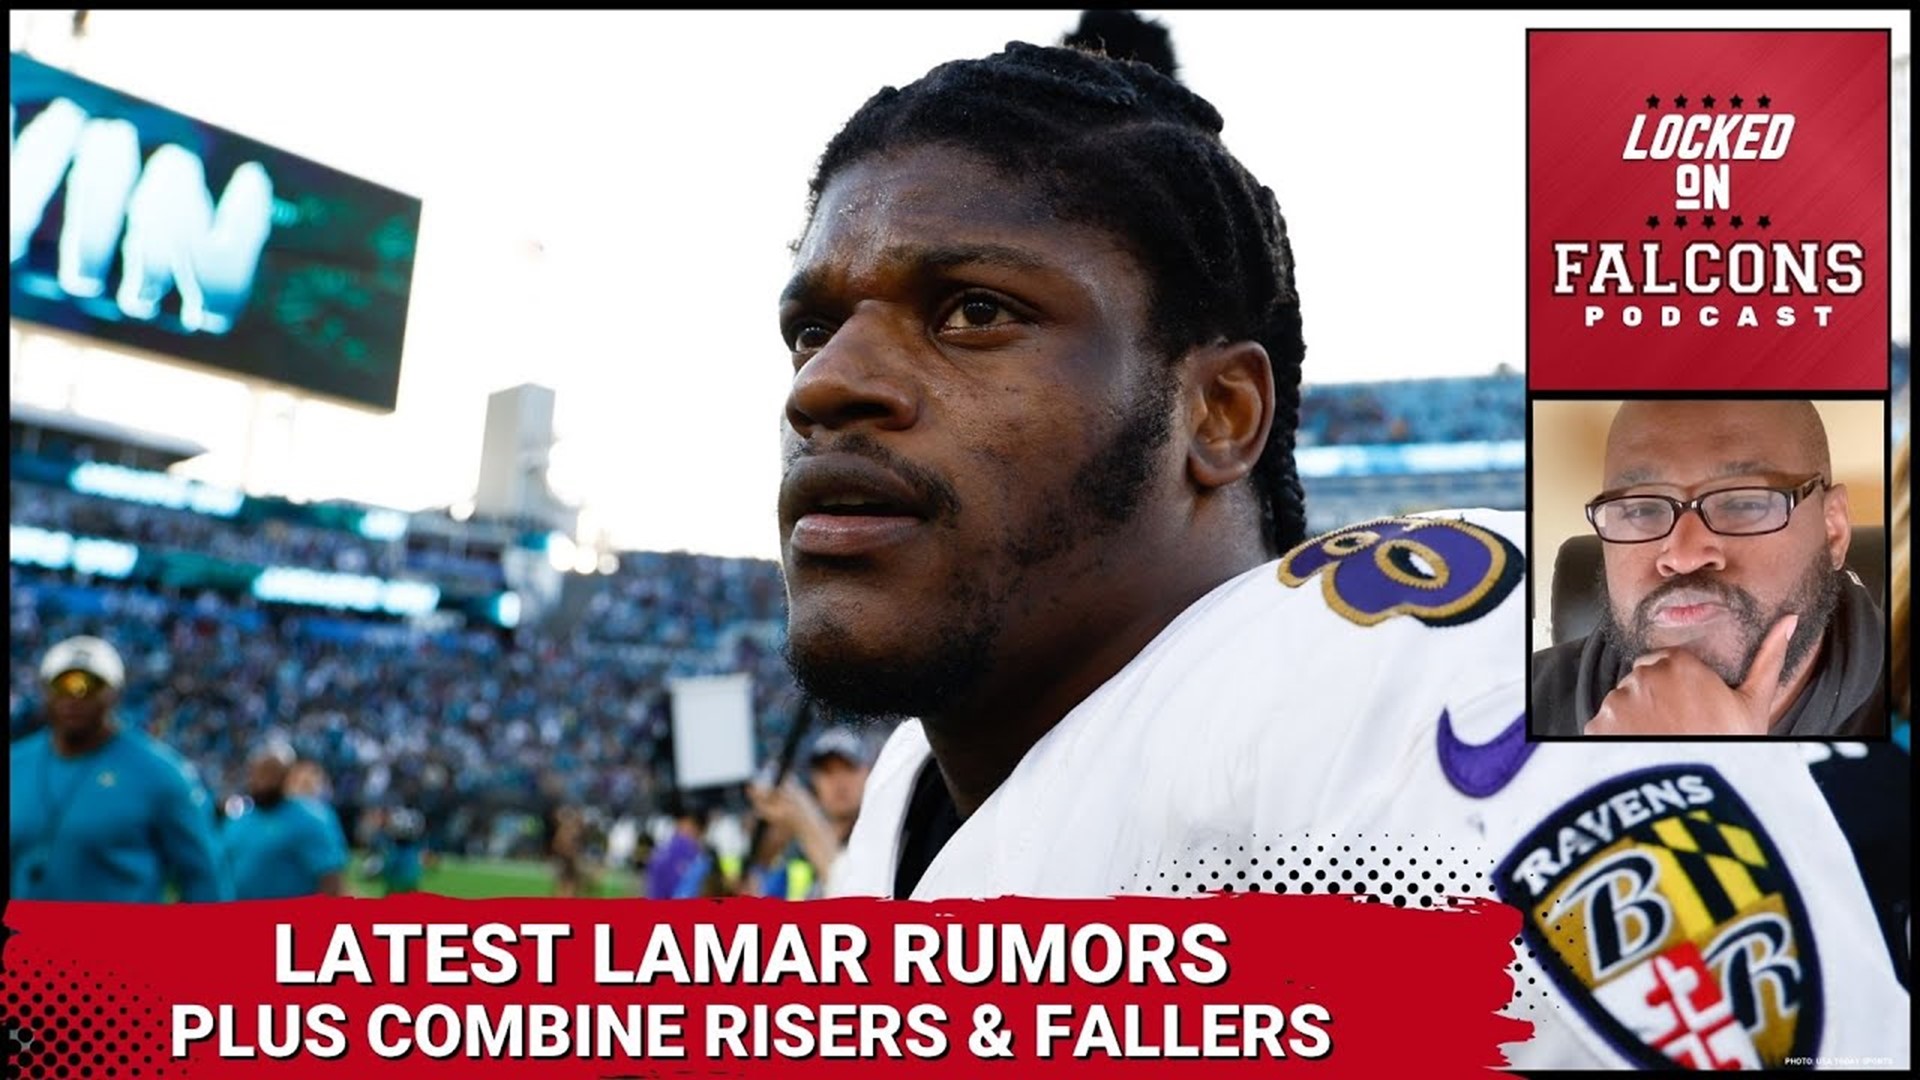 Atlanta Falcons' pursuit of Lamar Jackson might get complicated plus Combine risers & fallers